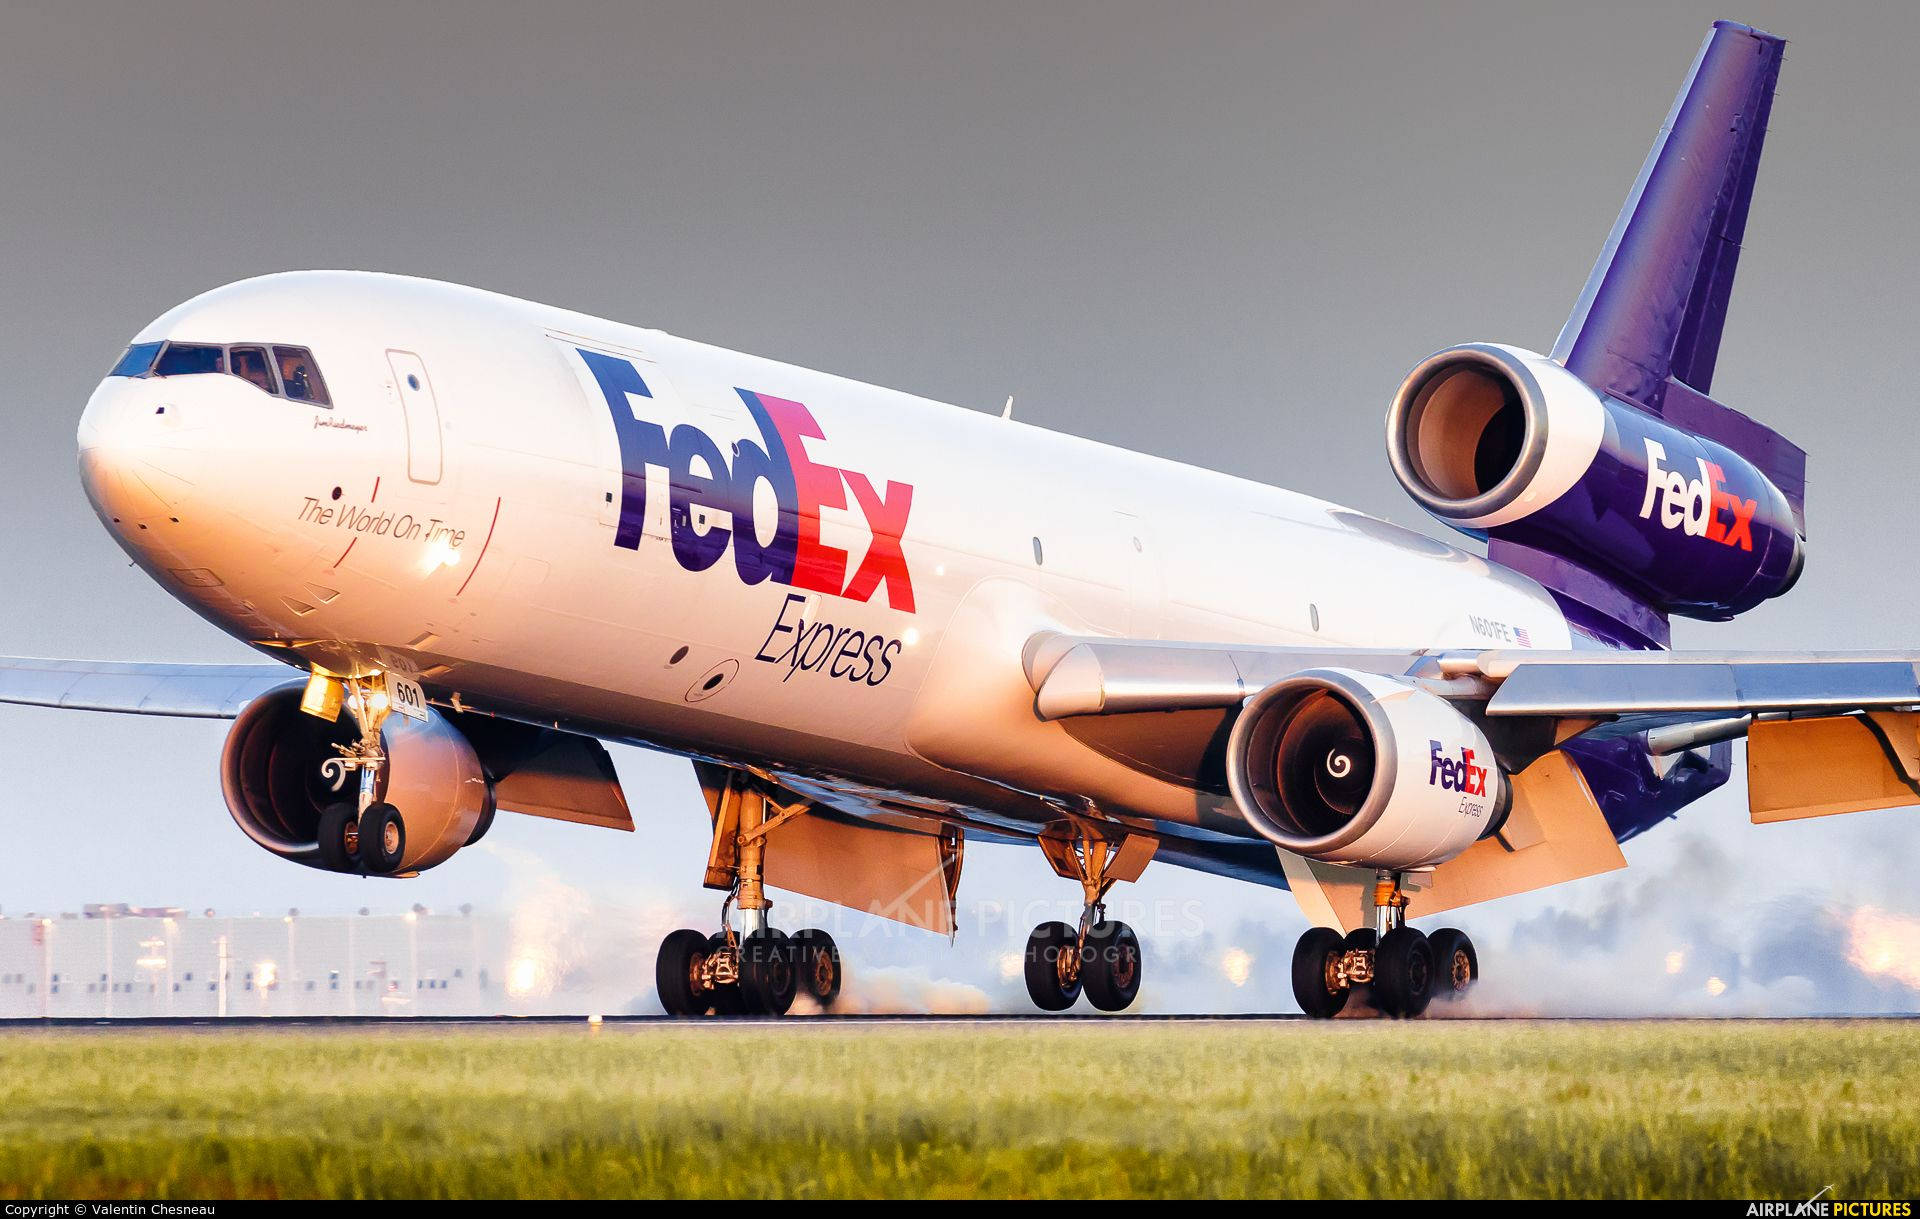 FedEx Express Cargo Plane Wallpaper